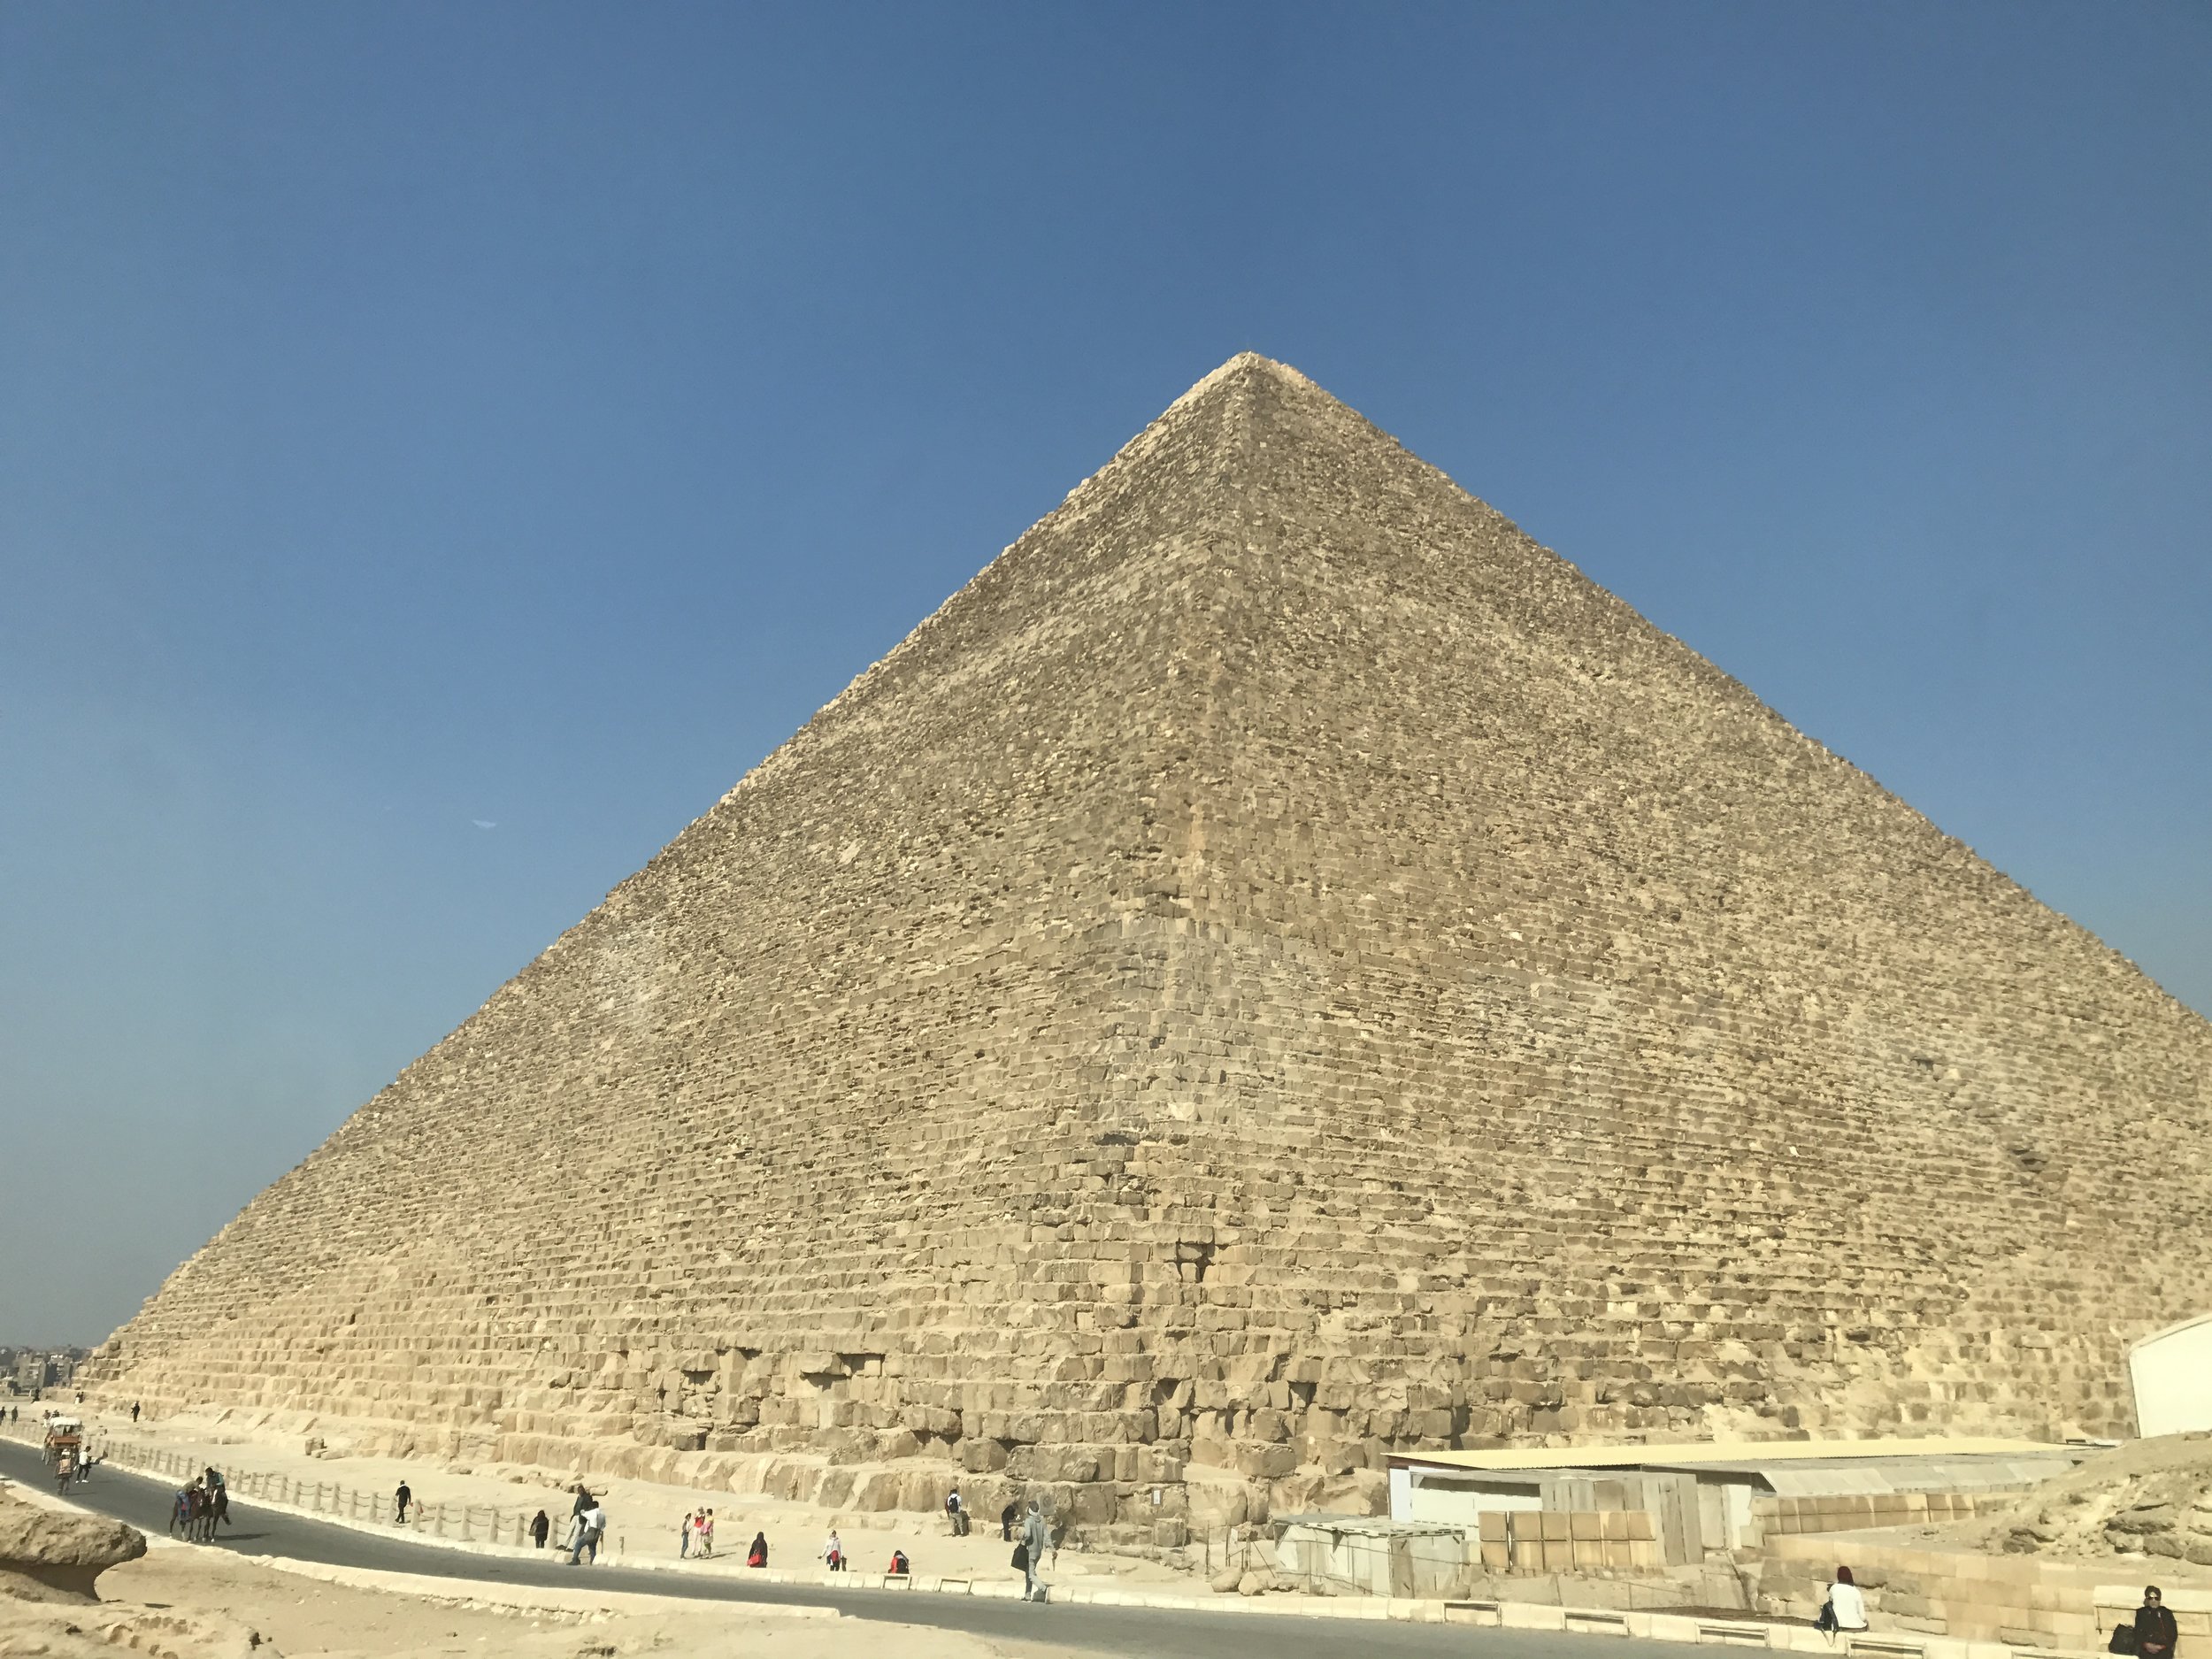 Pyramid, Giza Plateau (by Erika Mermuse)